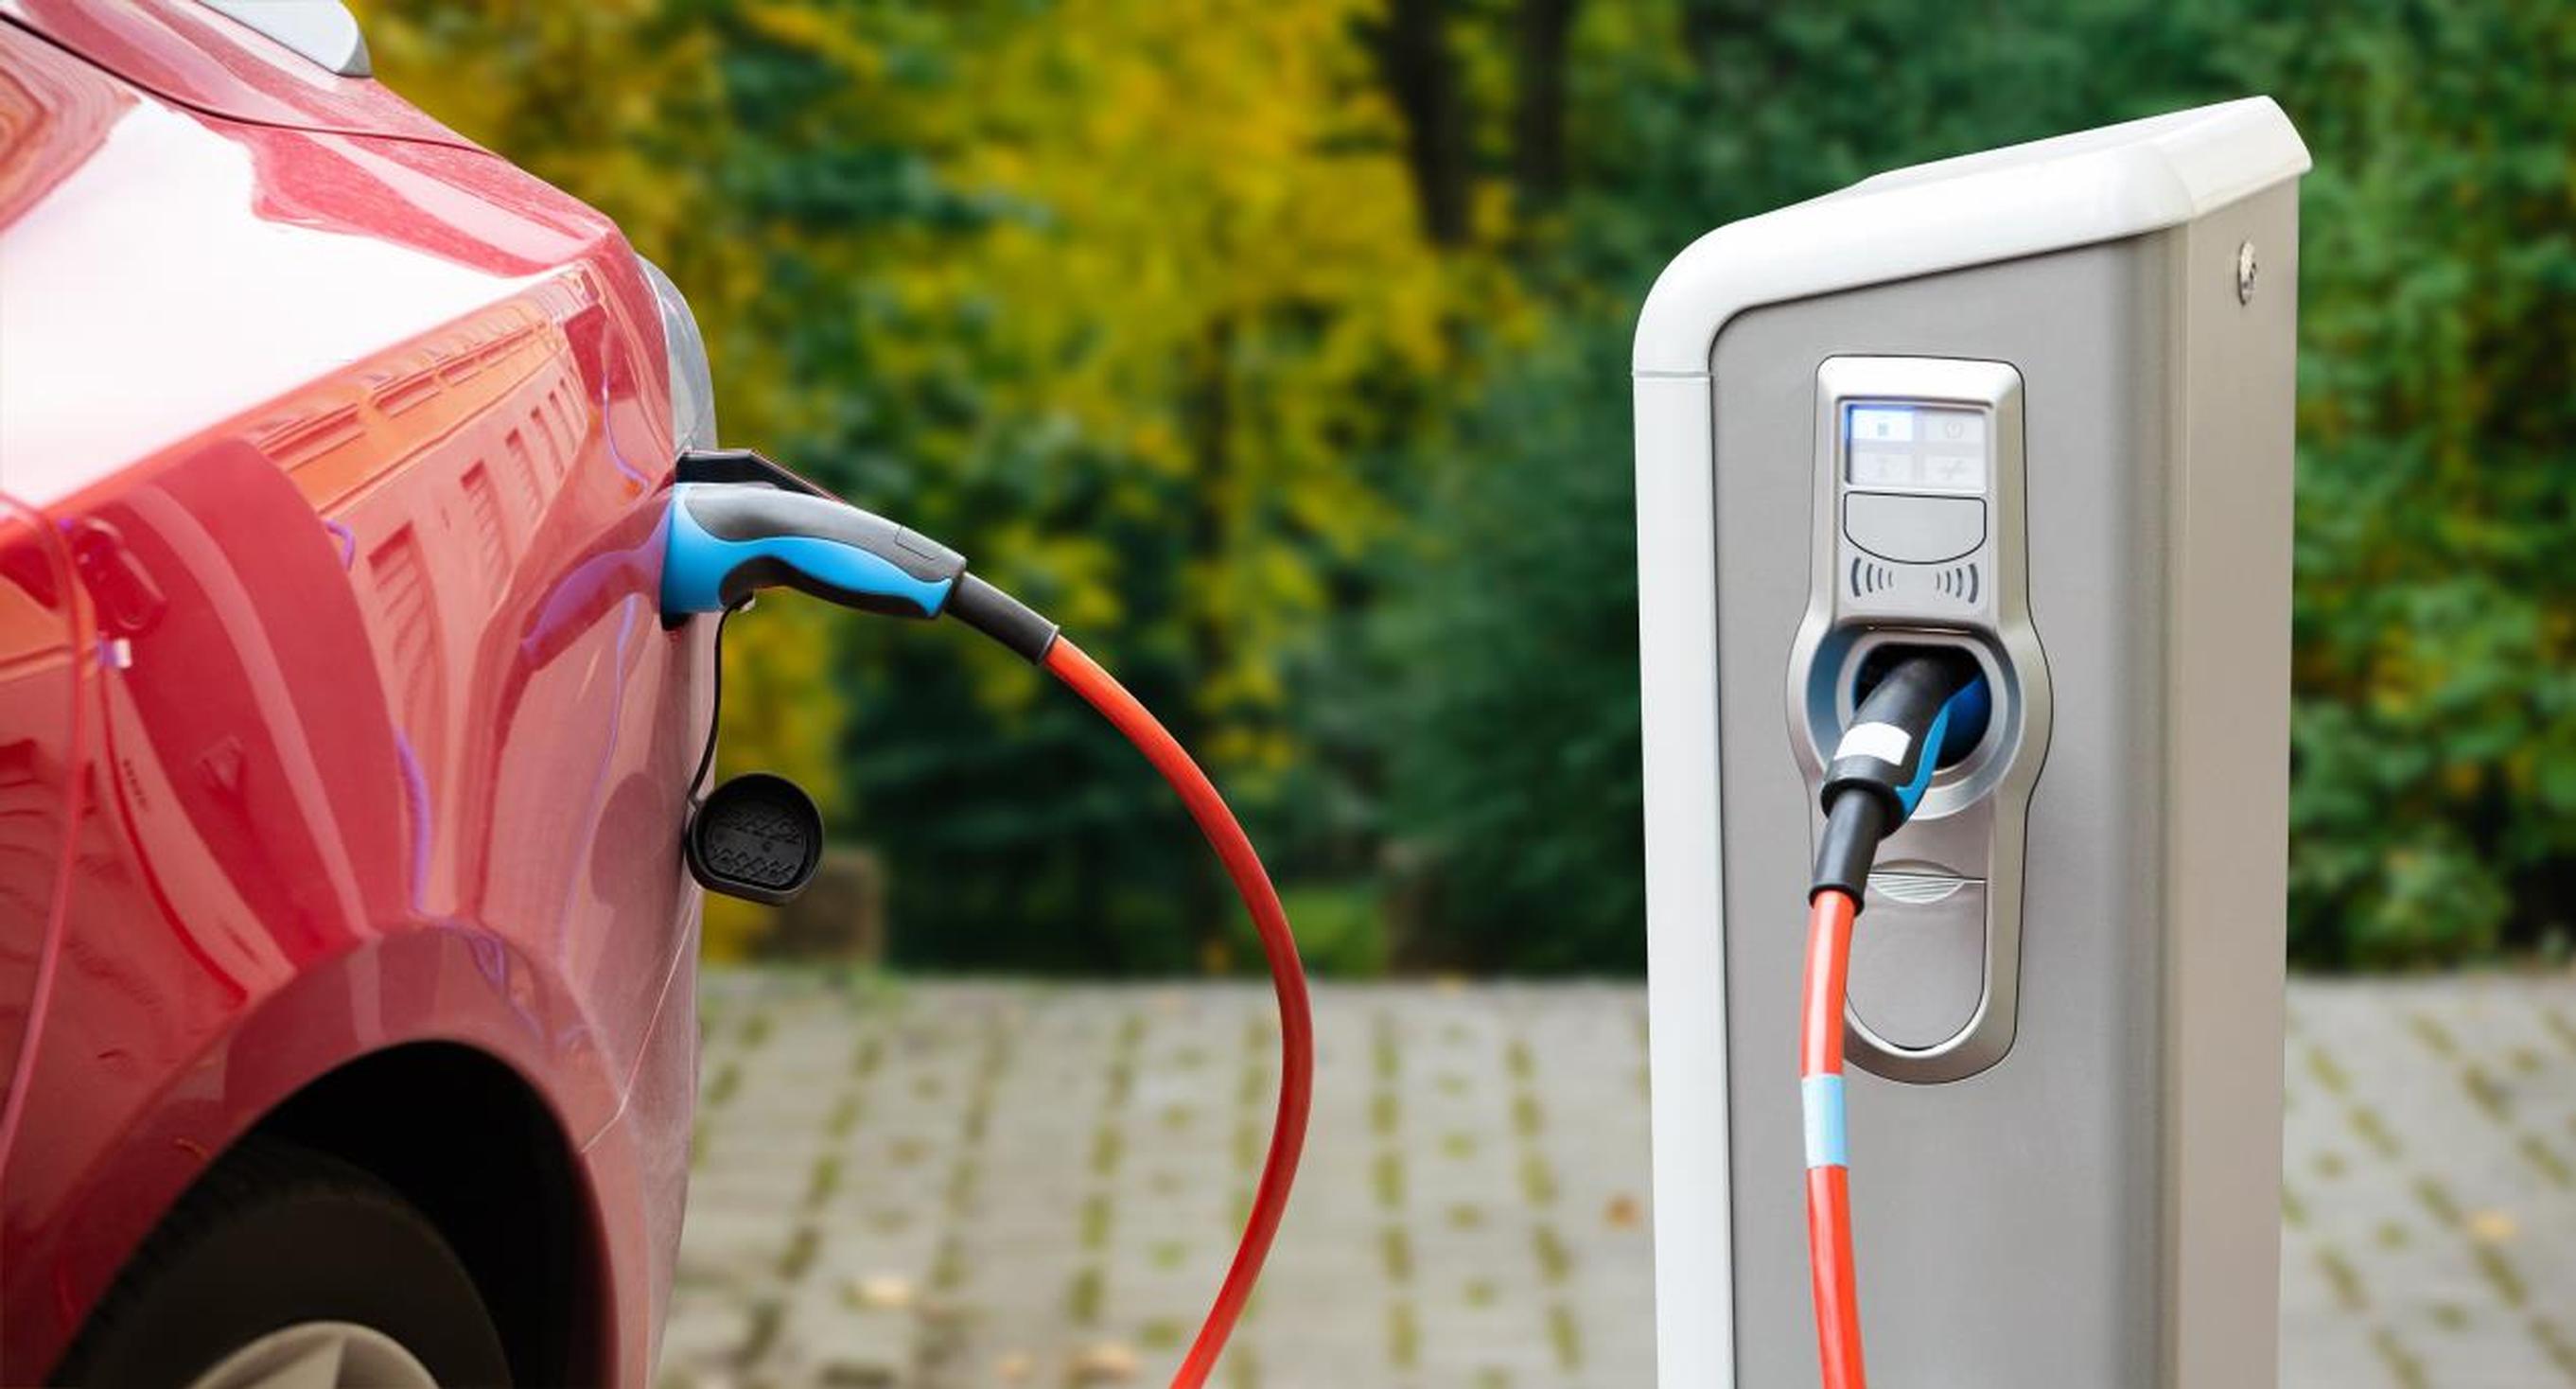 EV charging is a key element of the #wm2041 plans to deliver a net zero carbon region